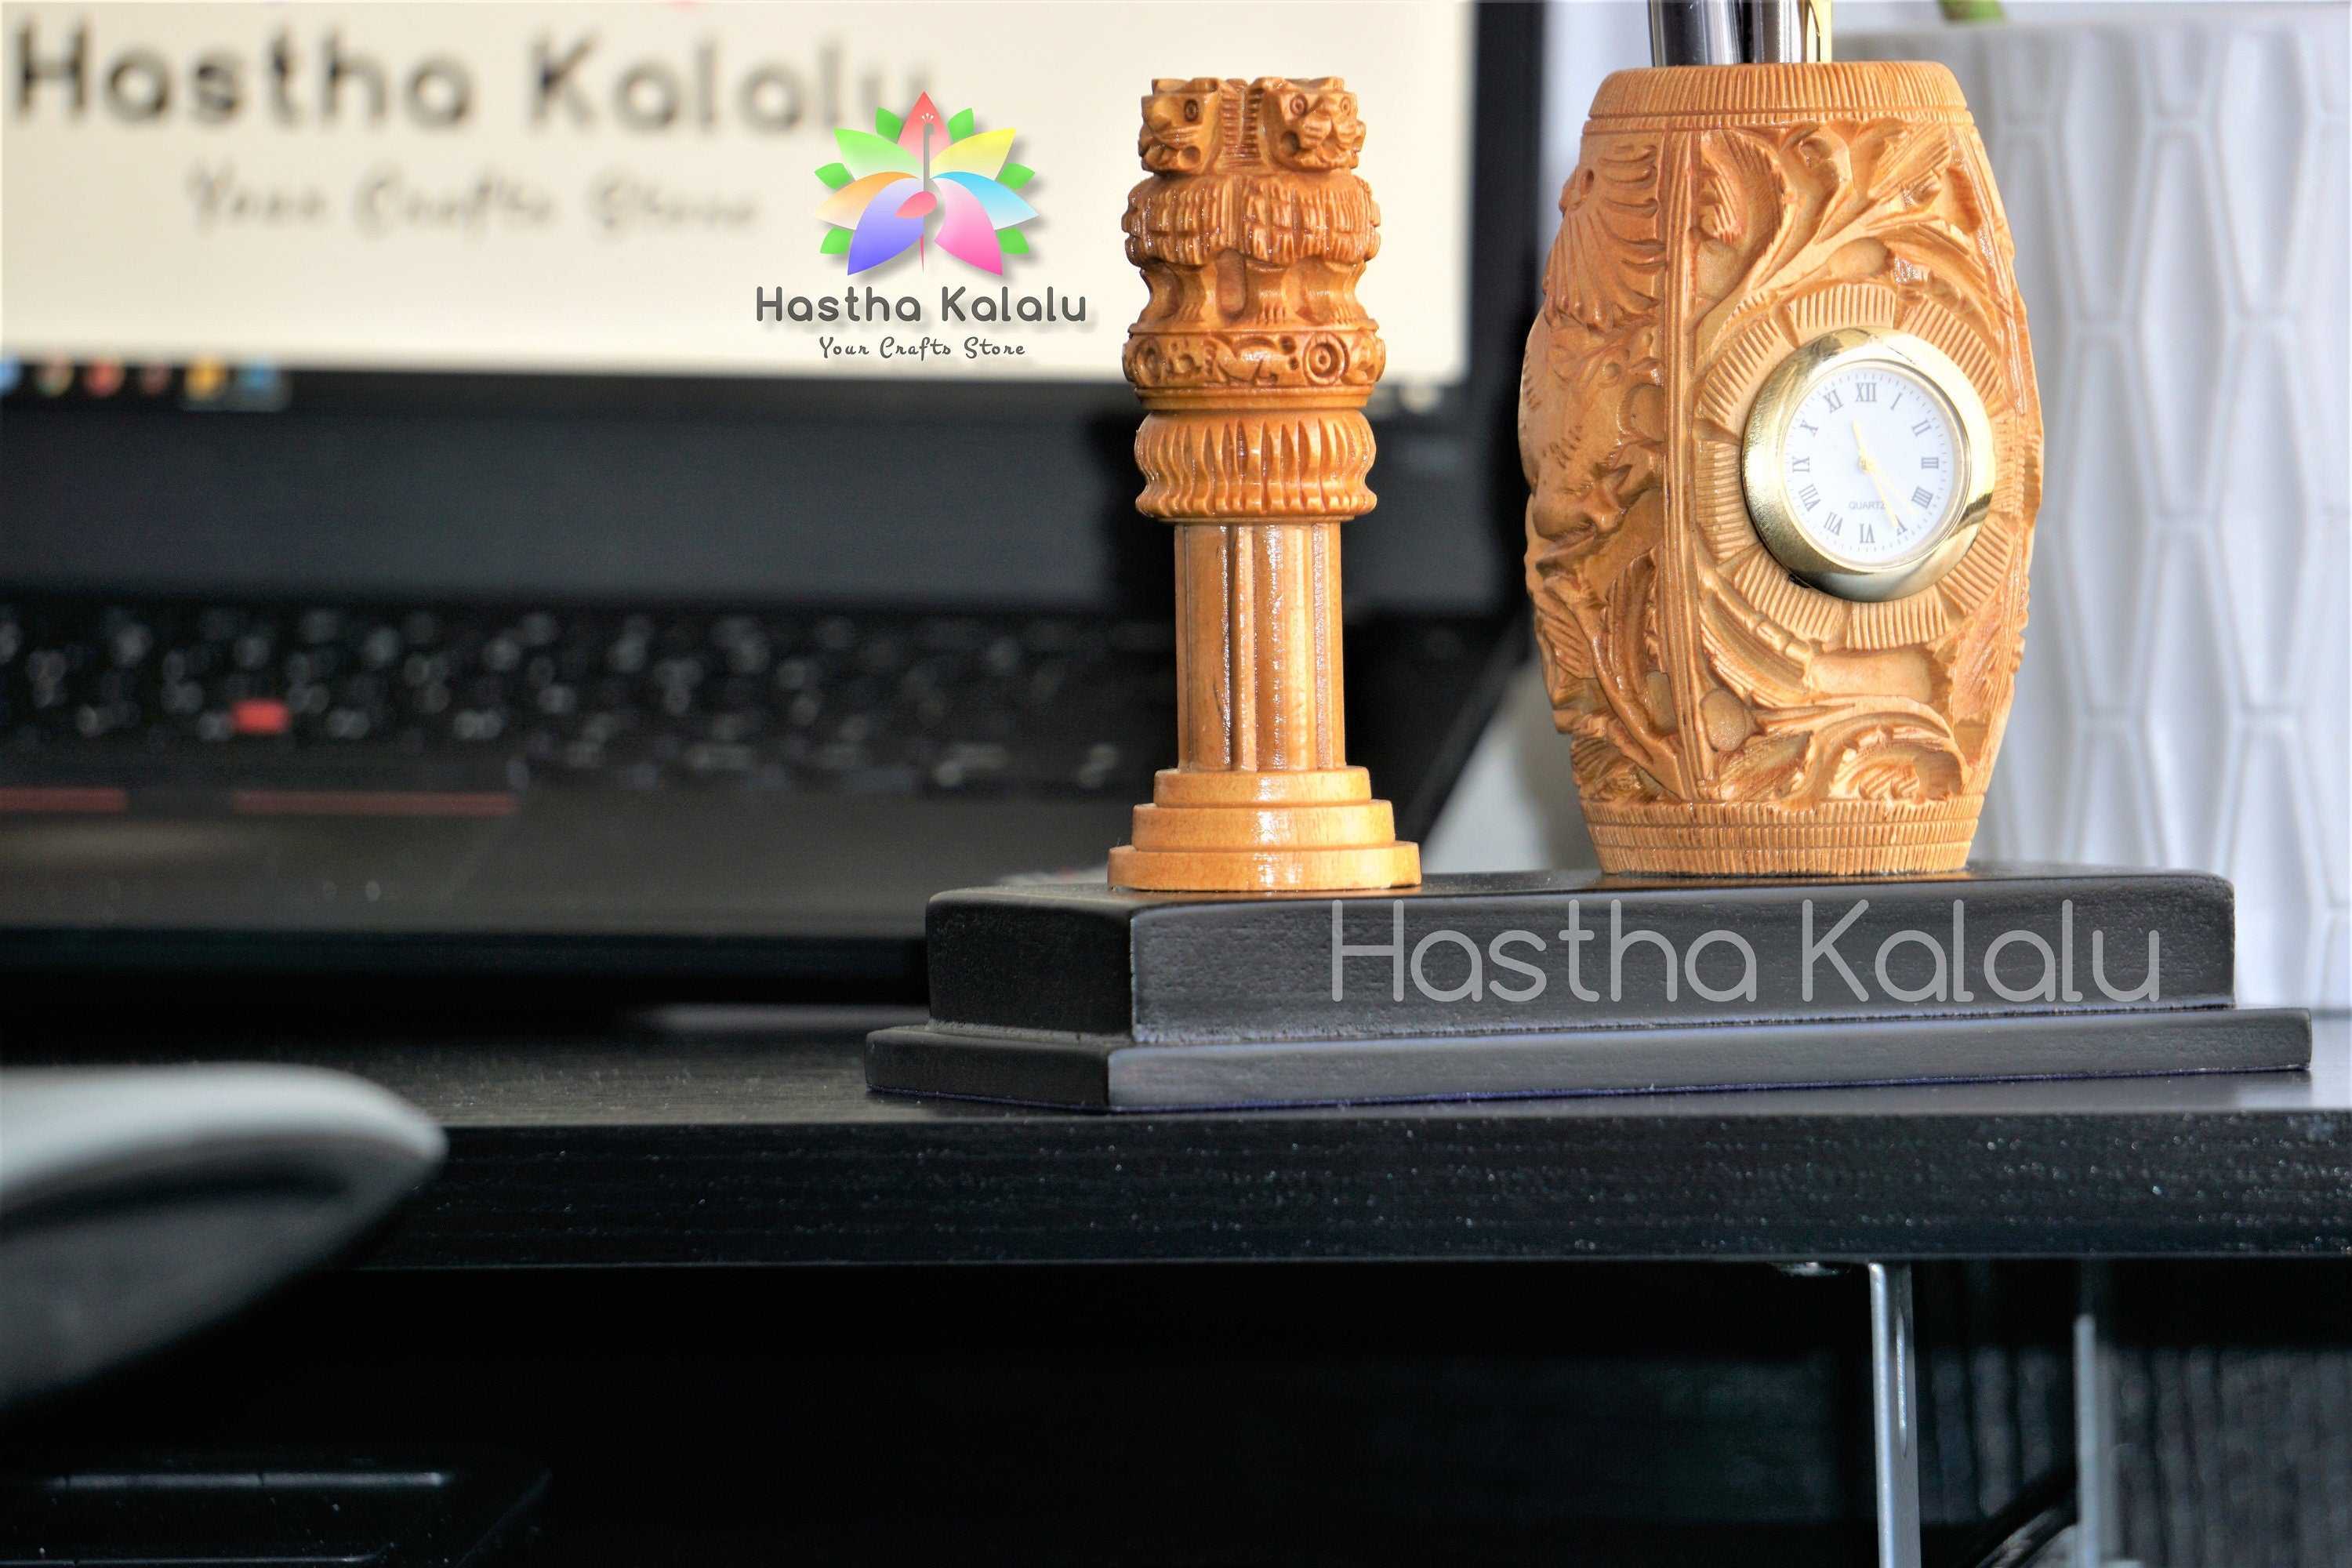 Elegant Clock Pen holder with Ashok Stambh/ Indian National Emblem